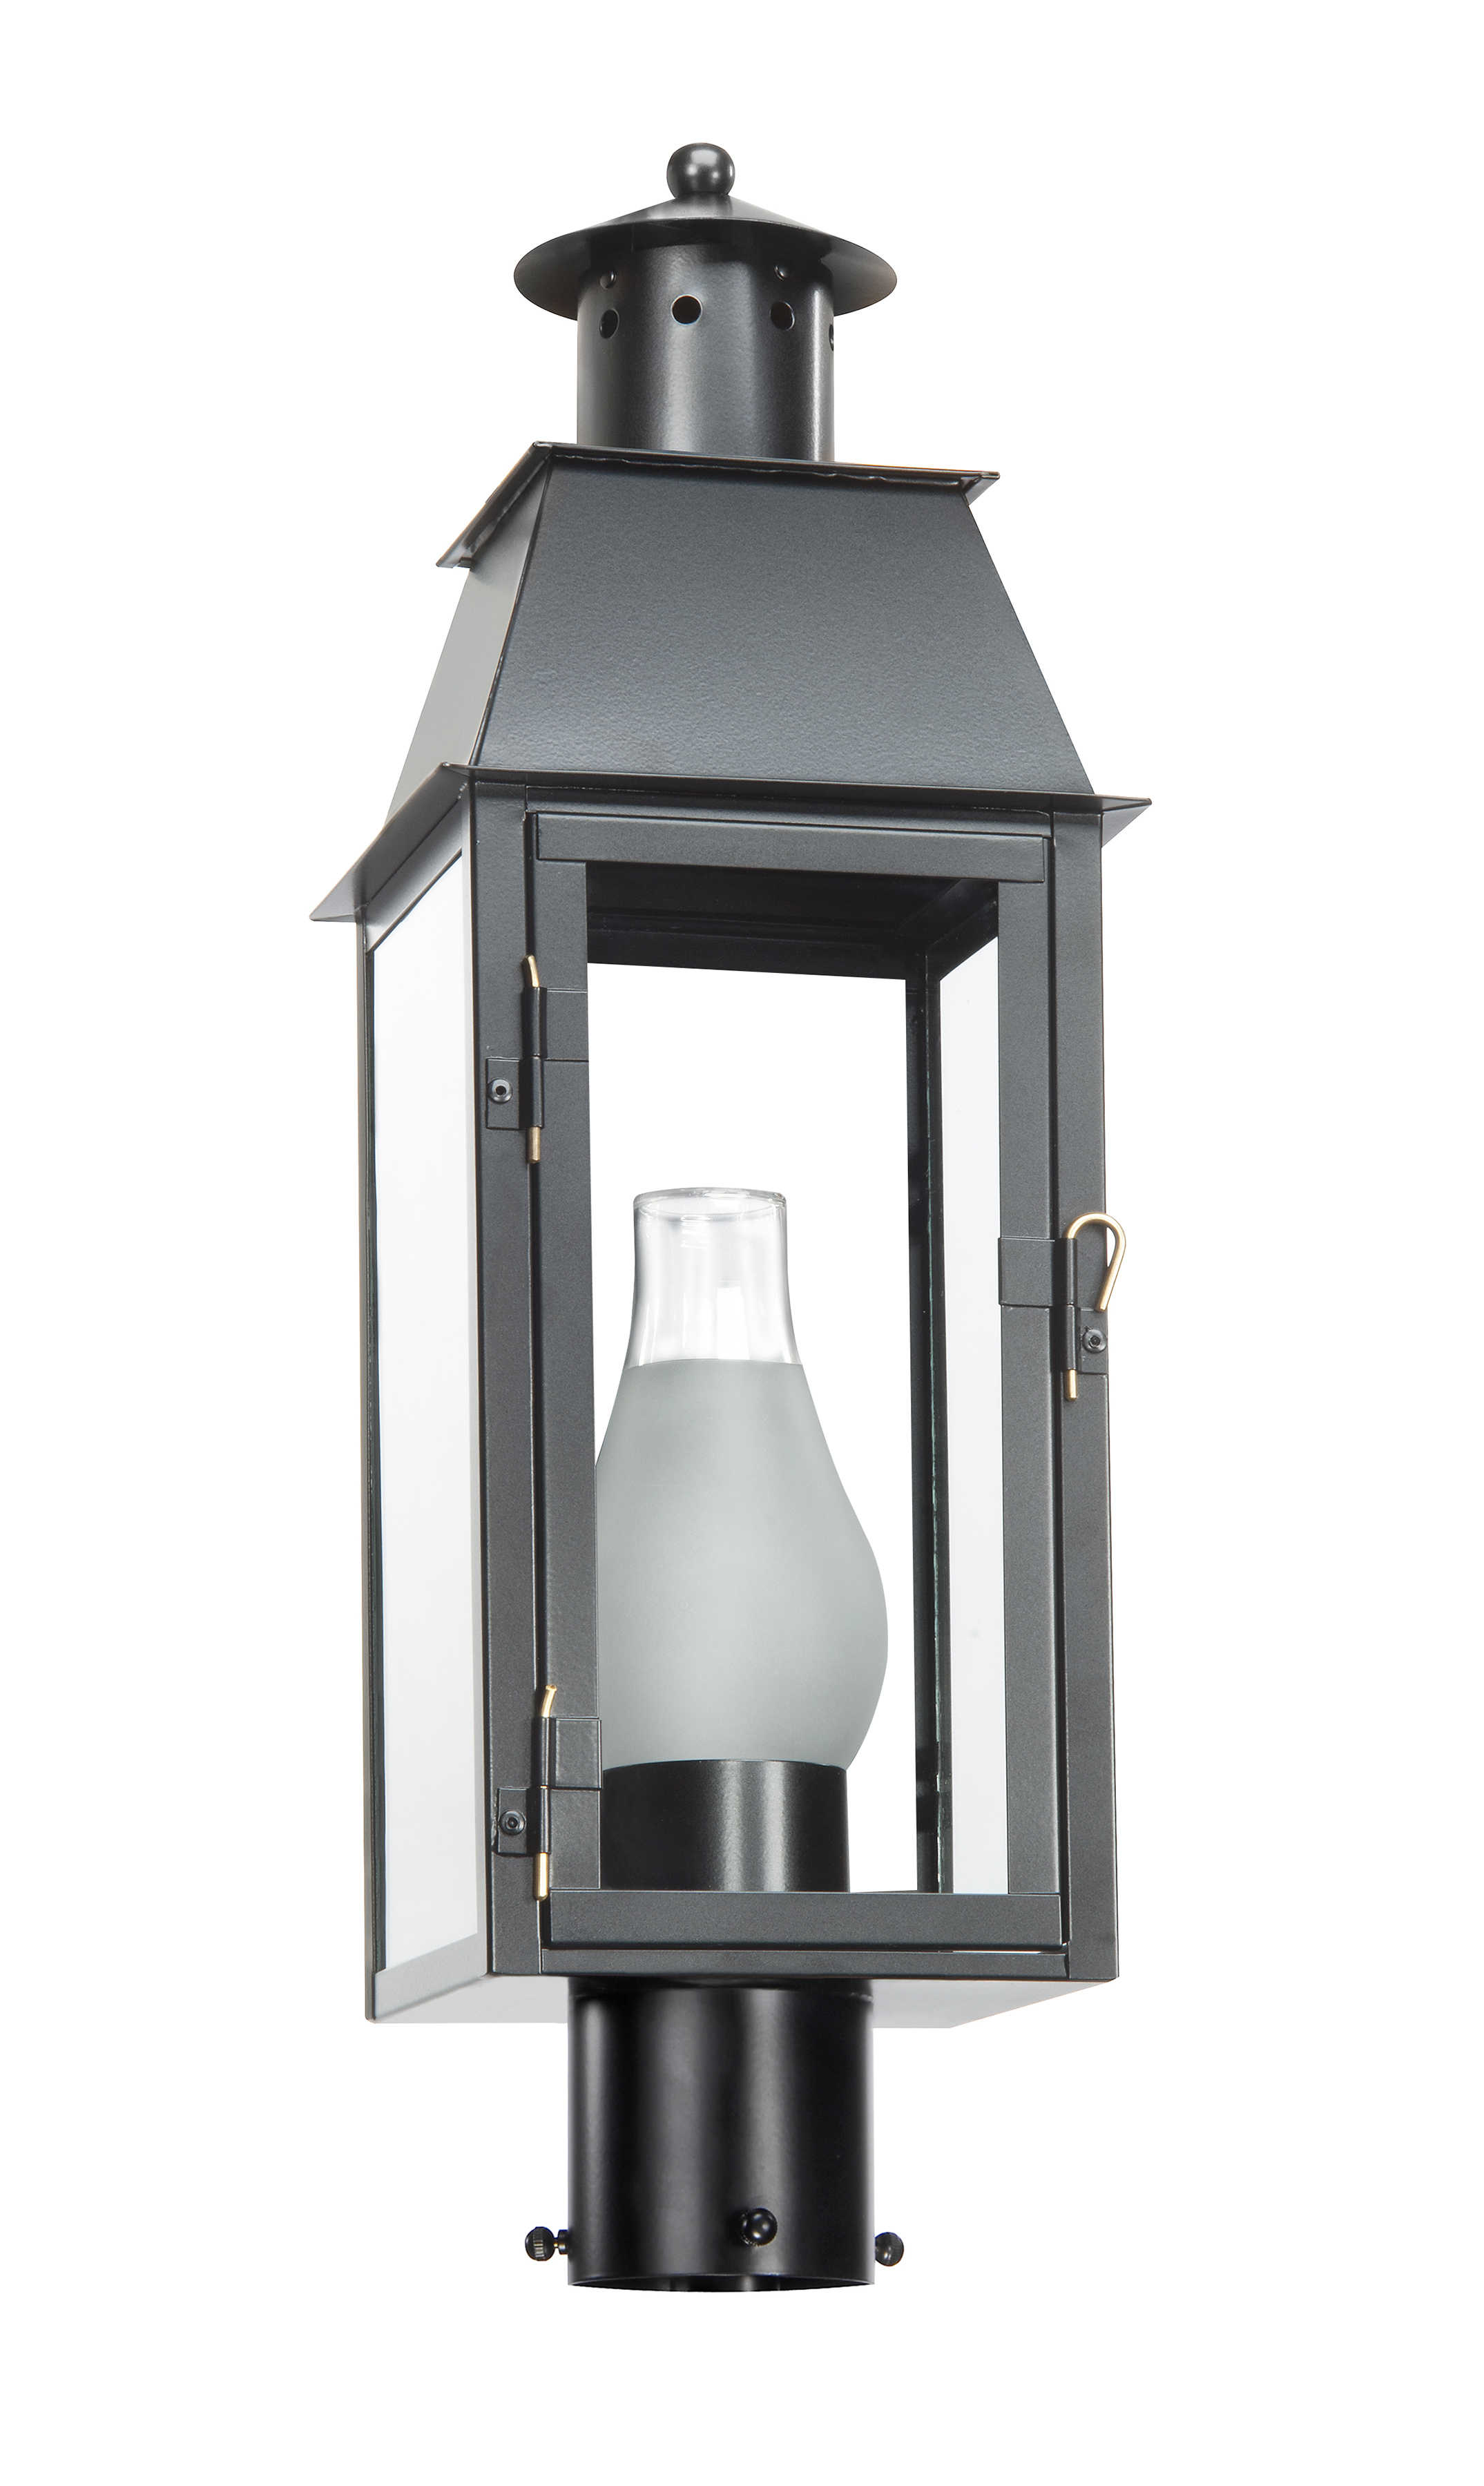 St. Phillips Collection SP-1754 post mount copper lantern exterior light black lantern copper lantern post mount